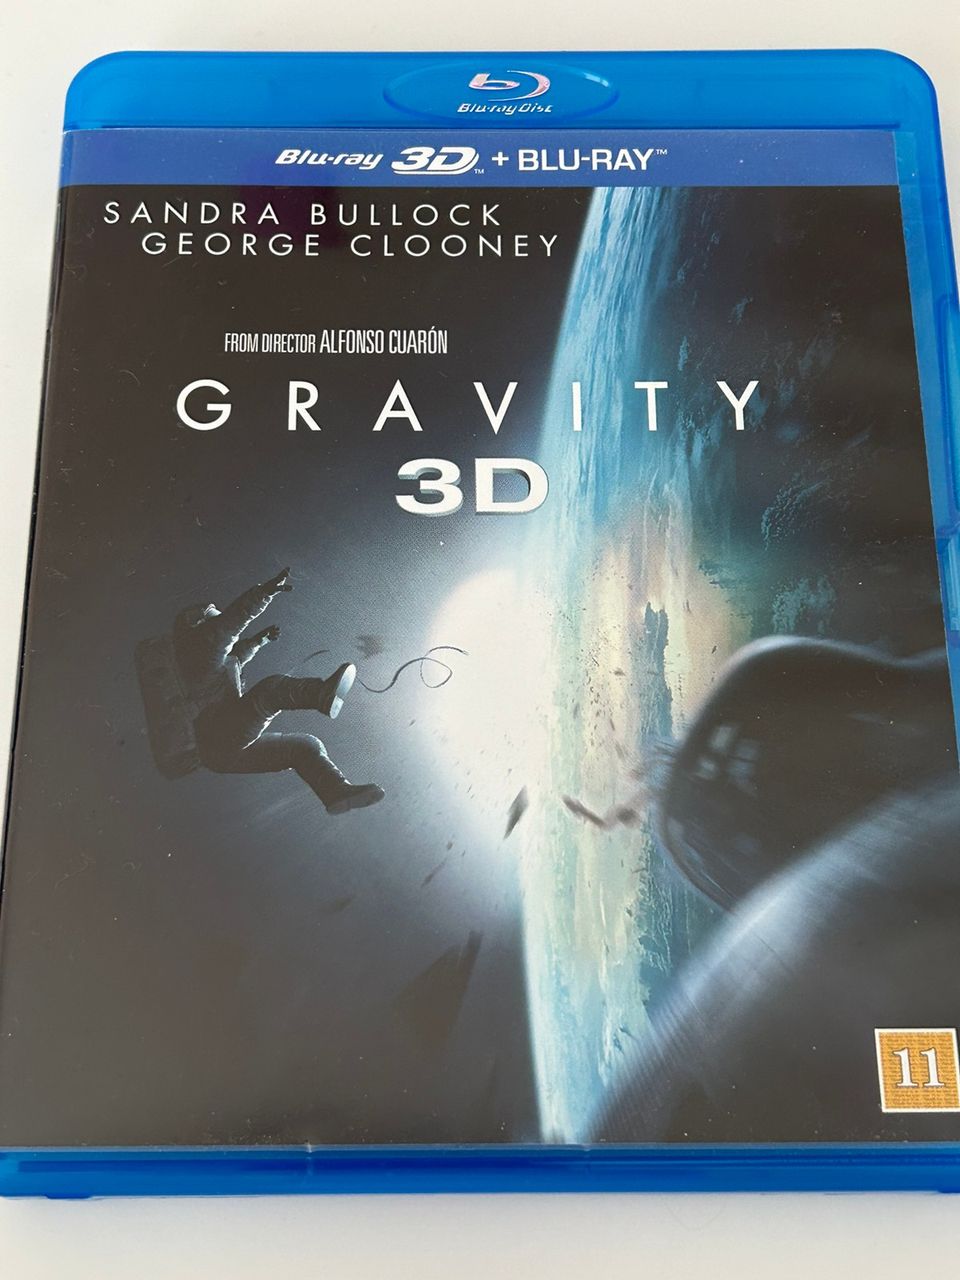 Gravity 3D blu-ray